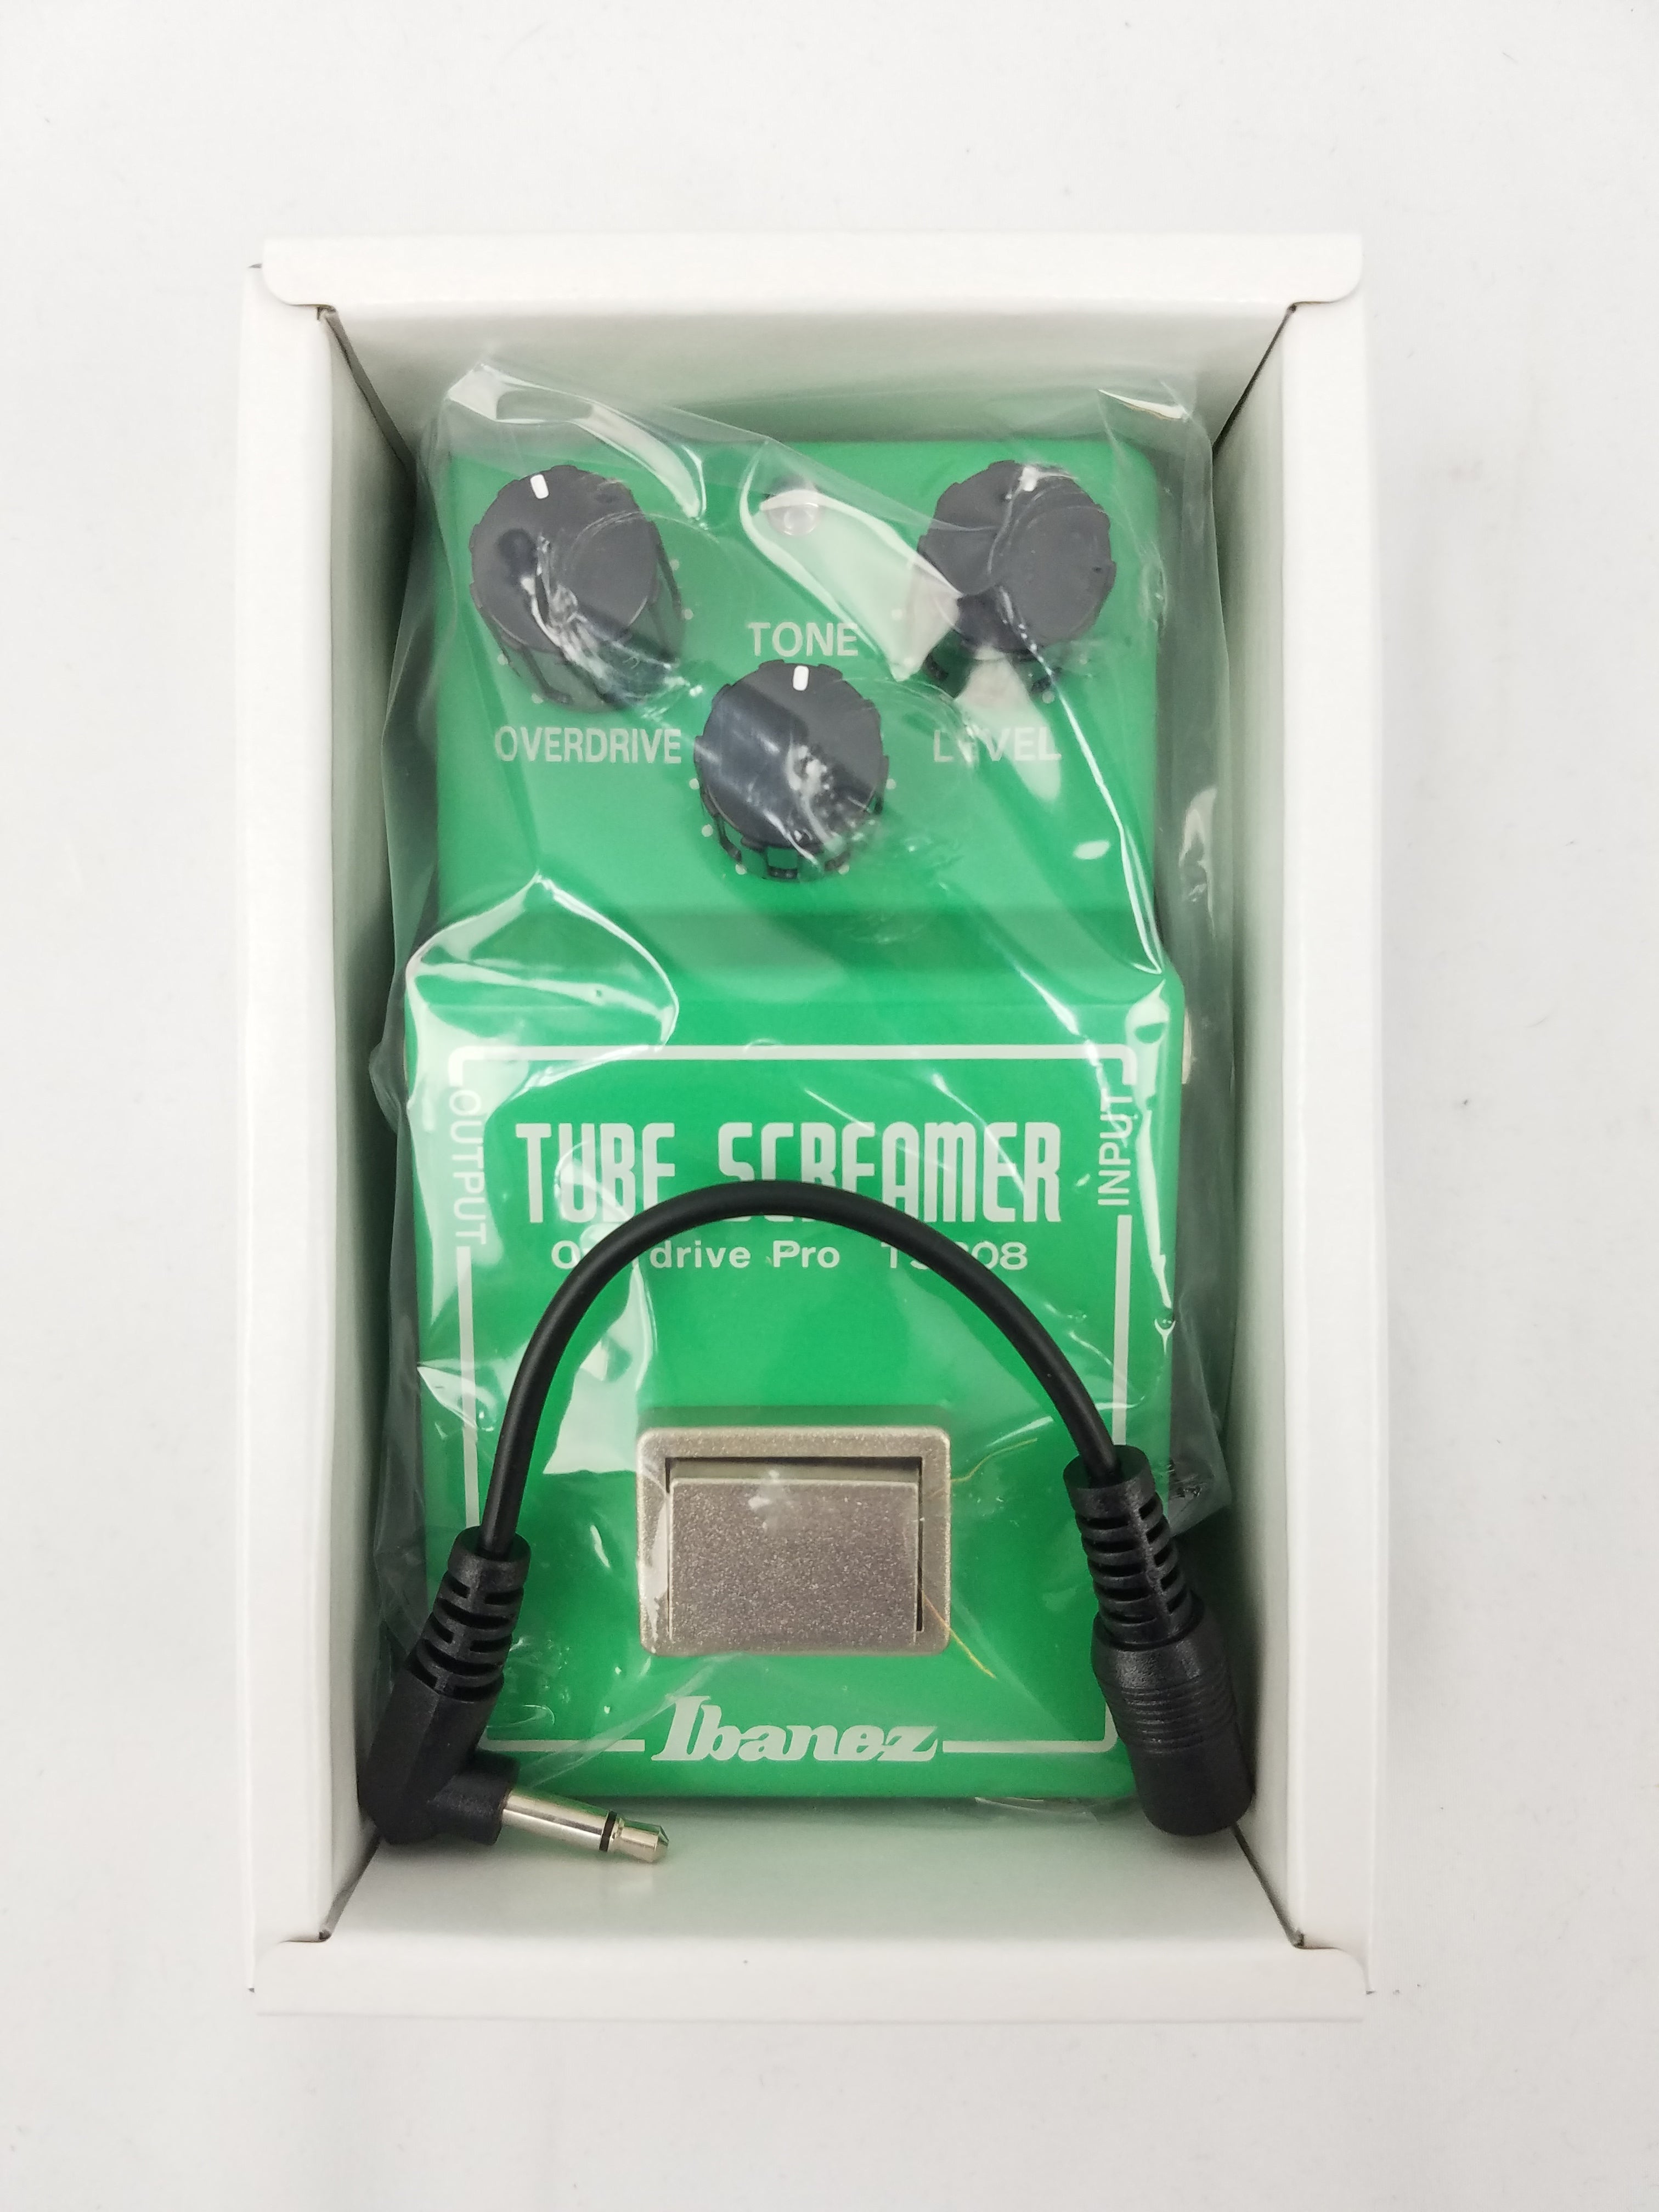 Ibanez TS-808 Original Tube Screamer Overdrive Pro Guitar Effects Pedal